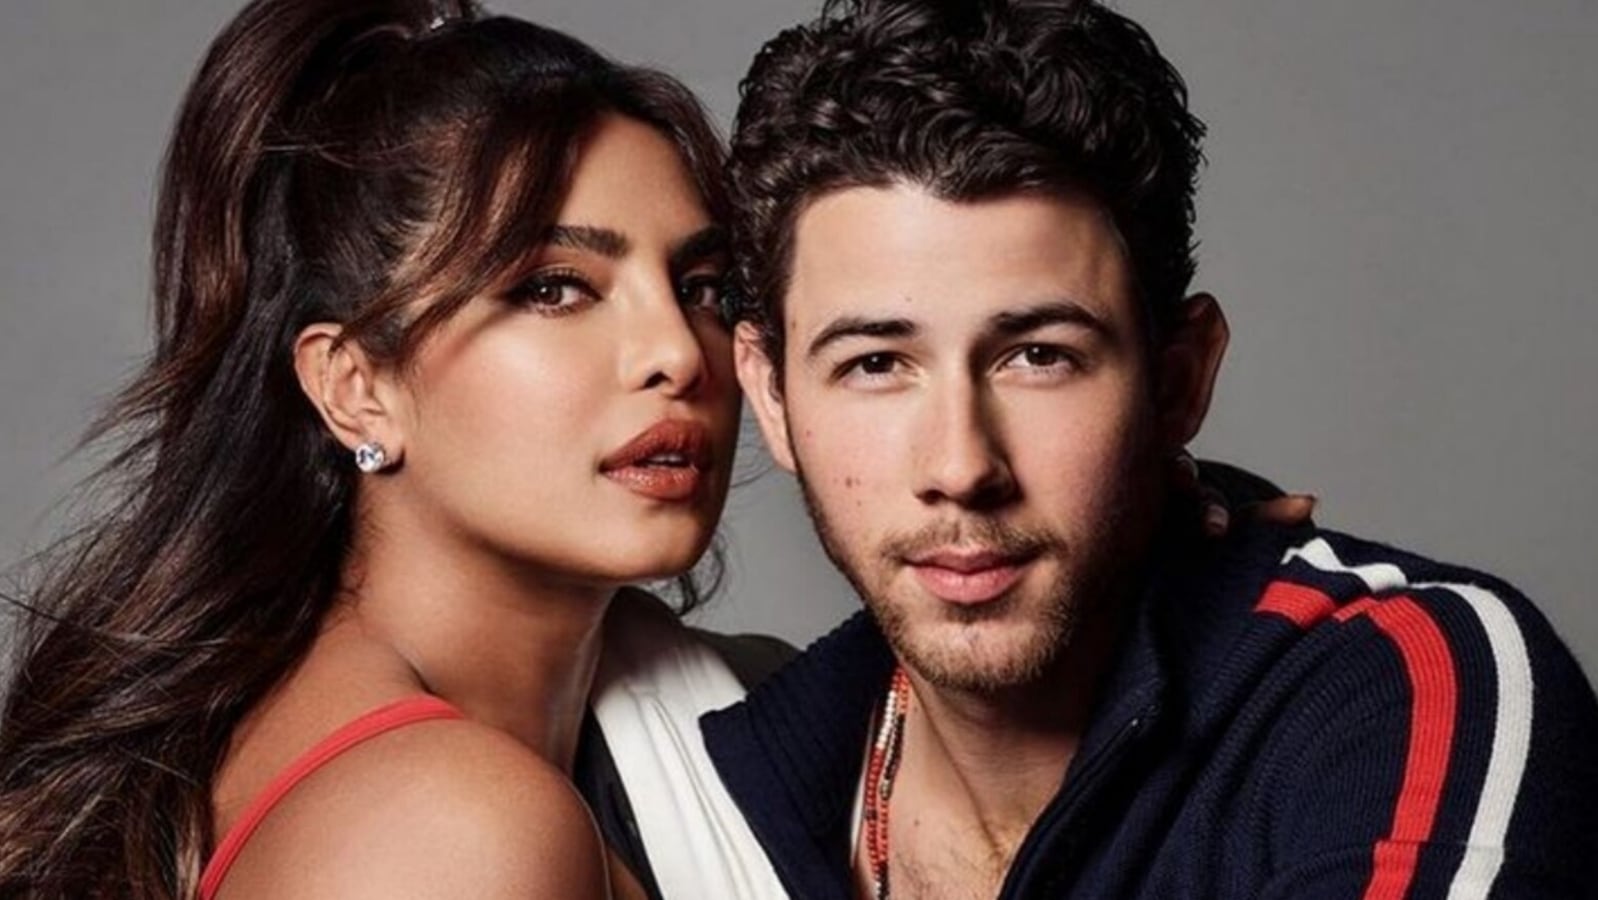 Priyanka Chopra and Nick Jonas turn the glam on in new photoshoot